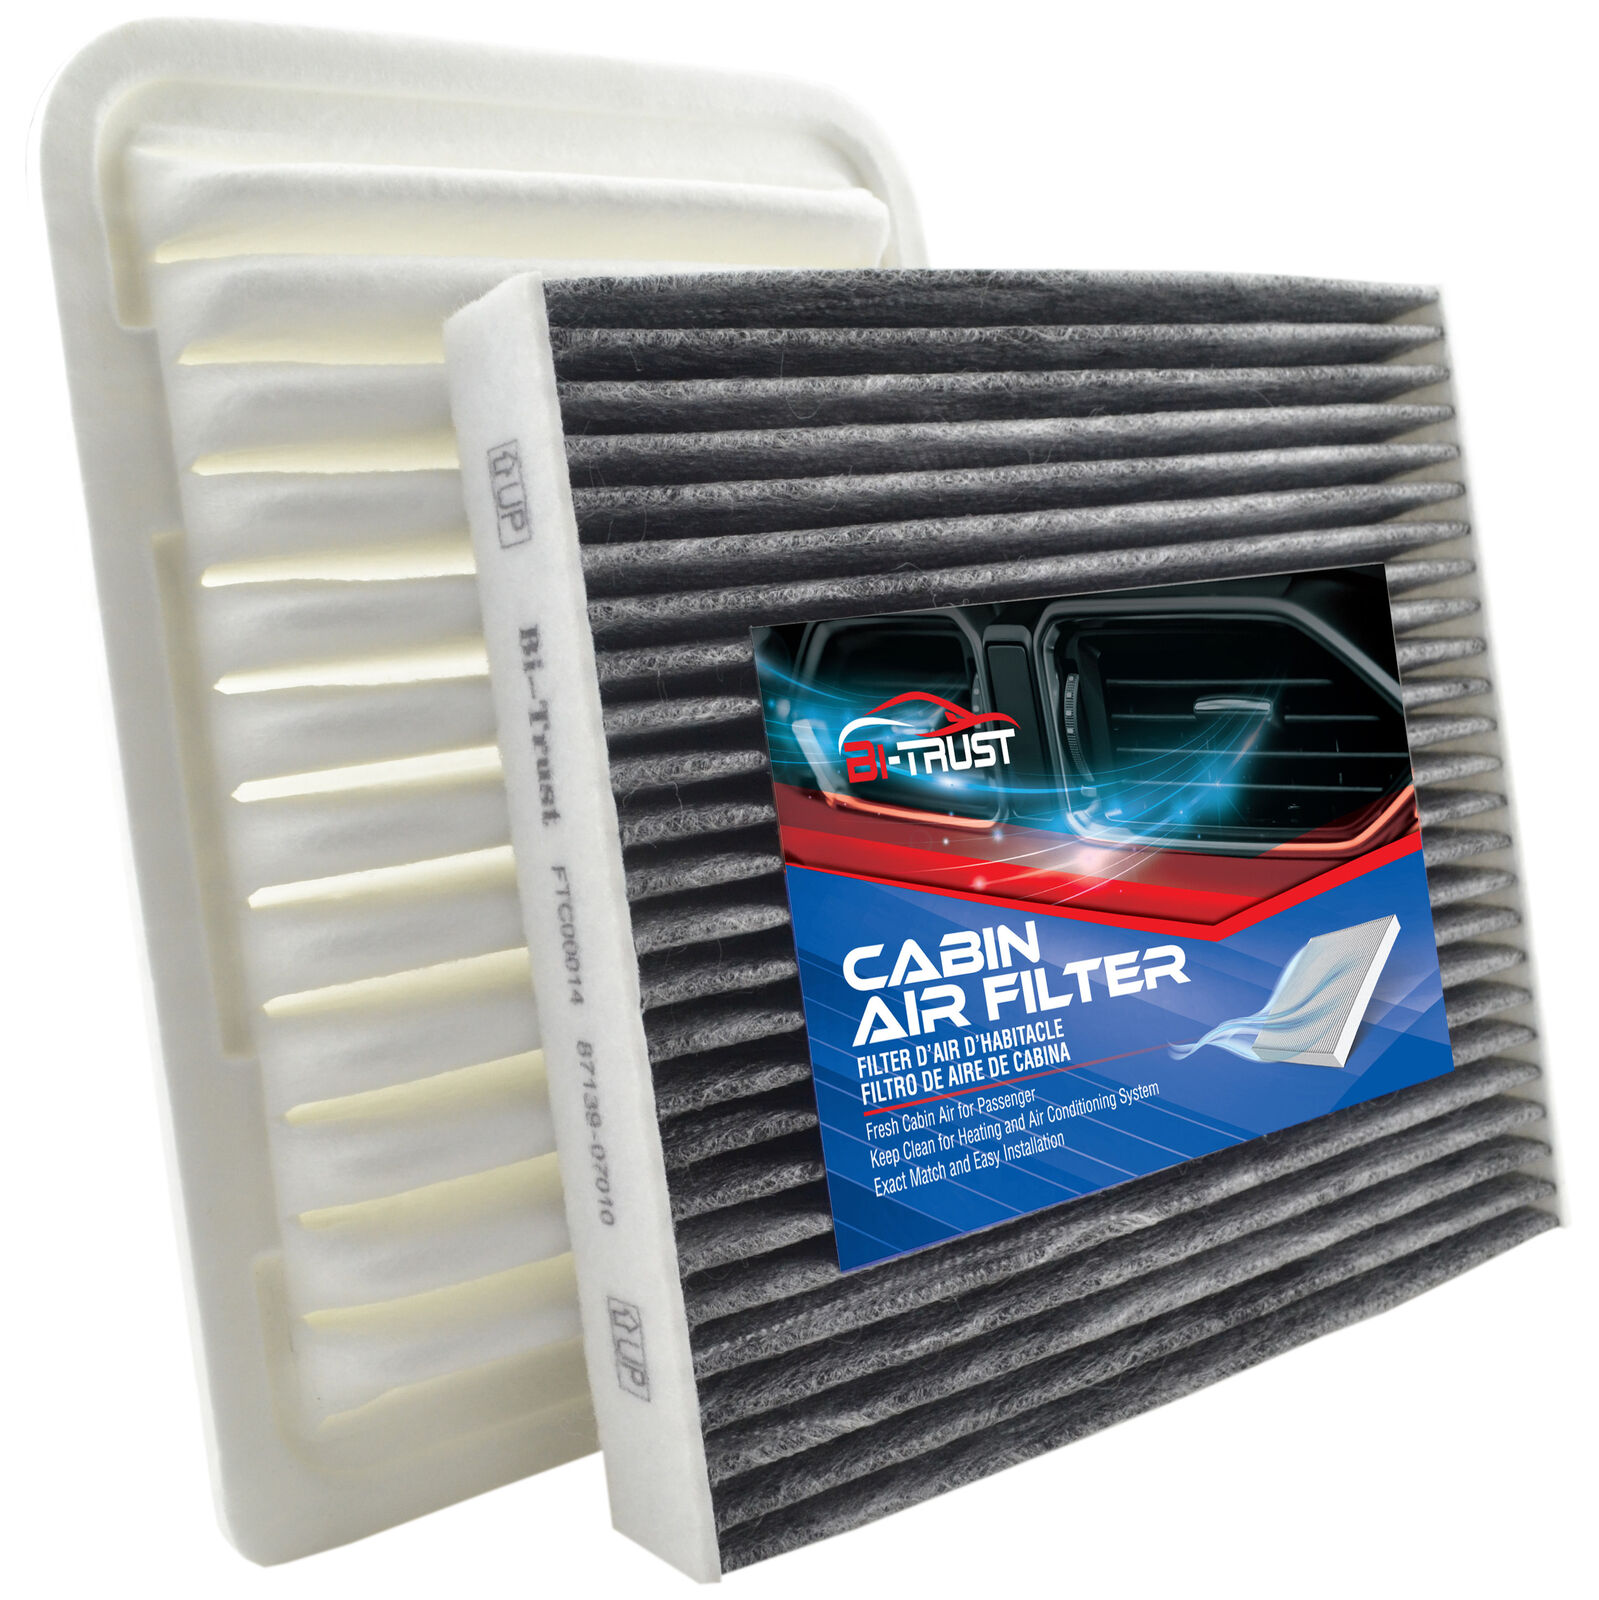 Engine and Cabin Air Filter Kit for Toyota Matrix Yaris Corolla Im Scion iM